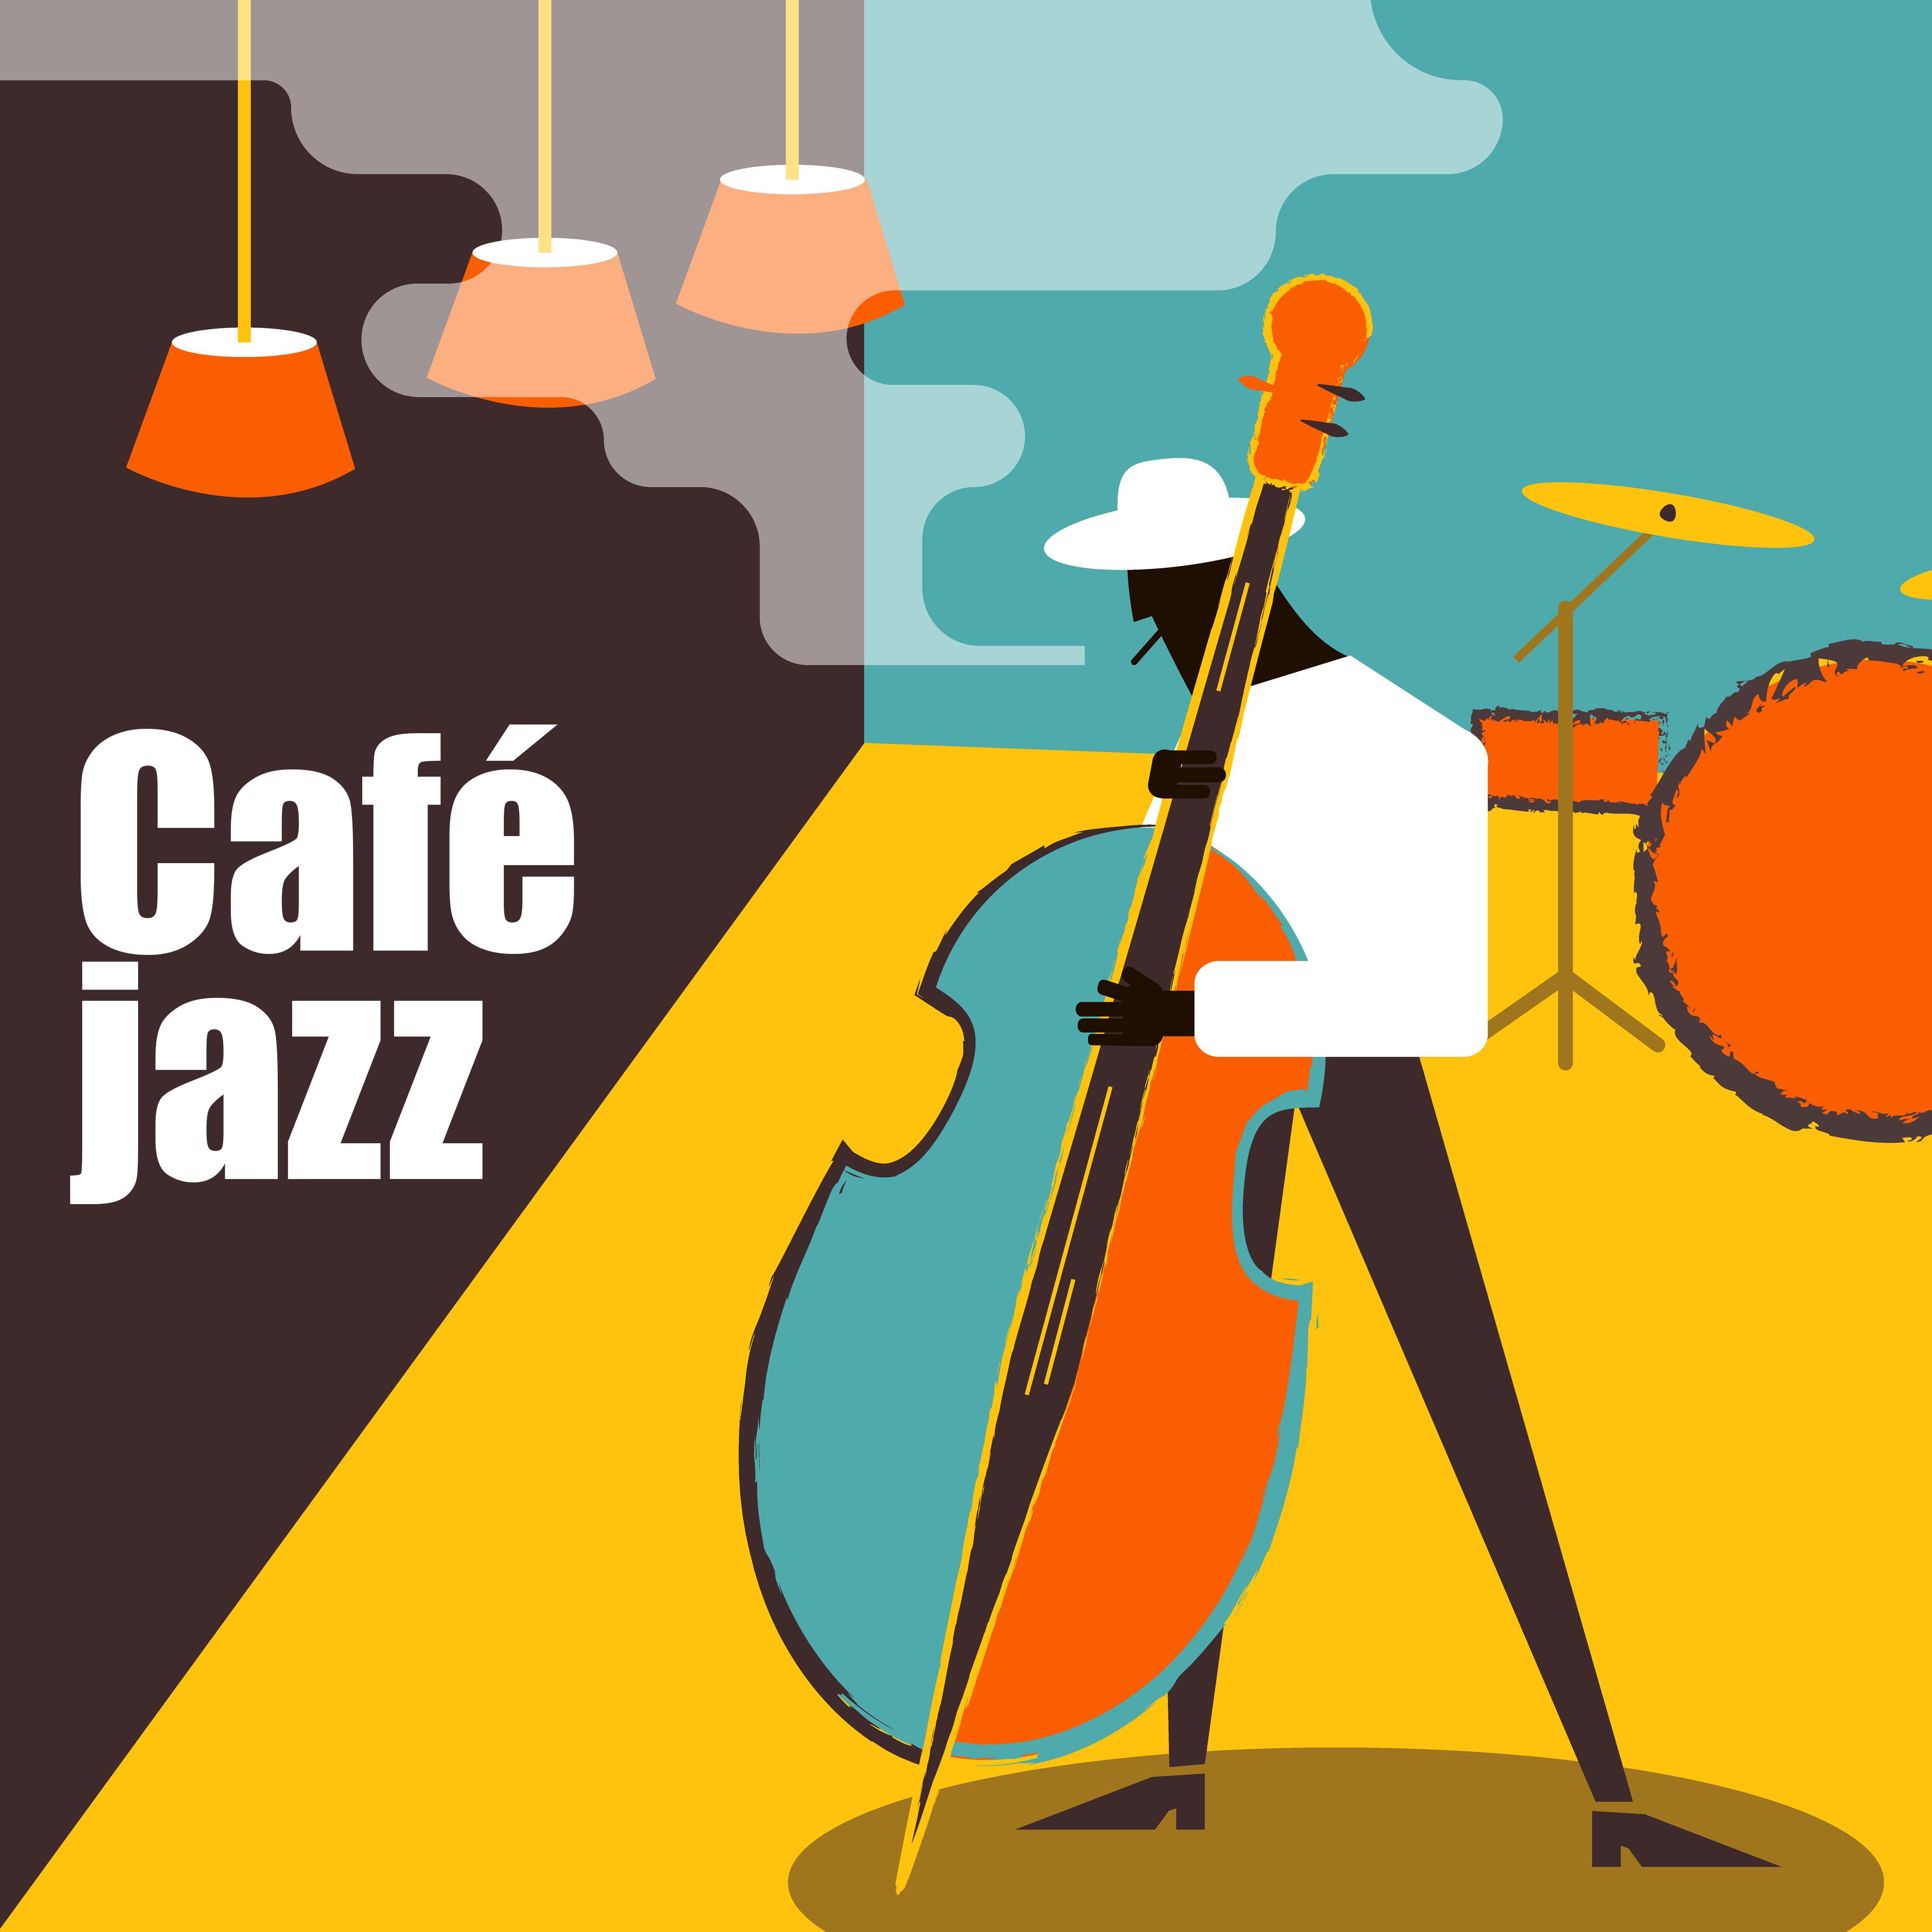 Cafe jazz: Piano relaxant, Smooth jazz, Piano de licat pour la de tente, Jazz instrumental musique ambient